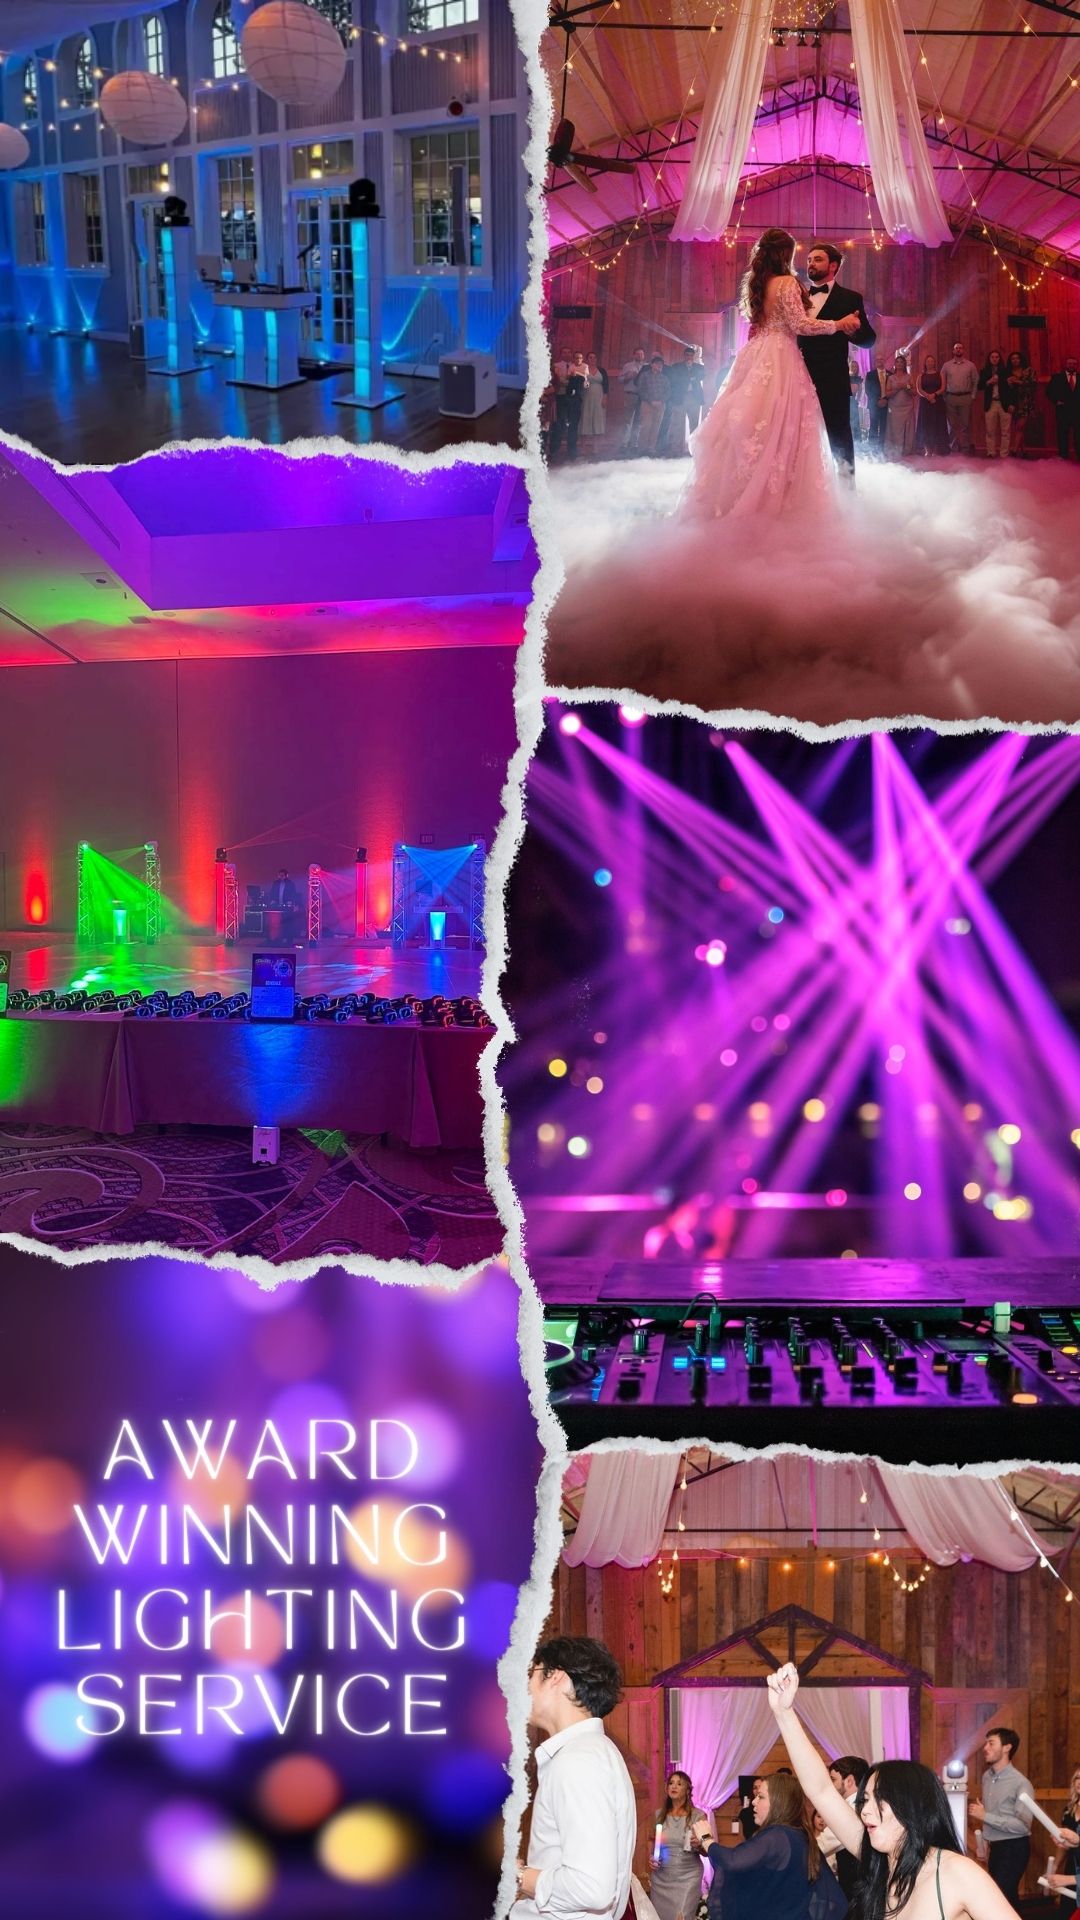 Award winning lighting services